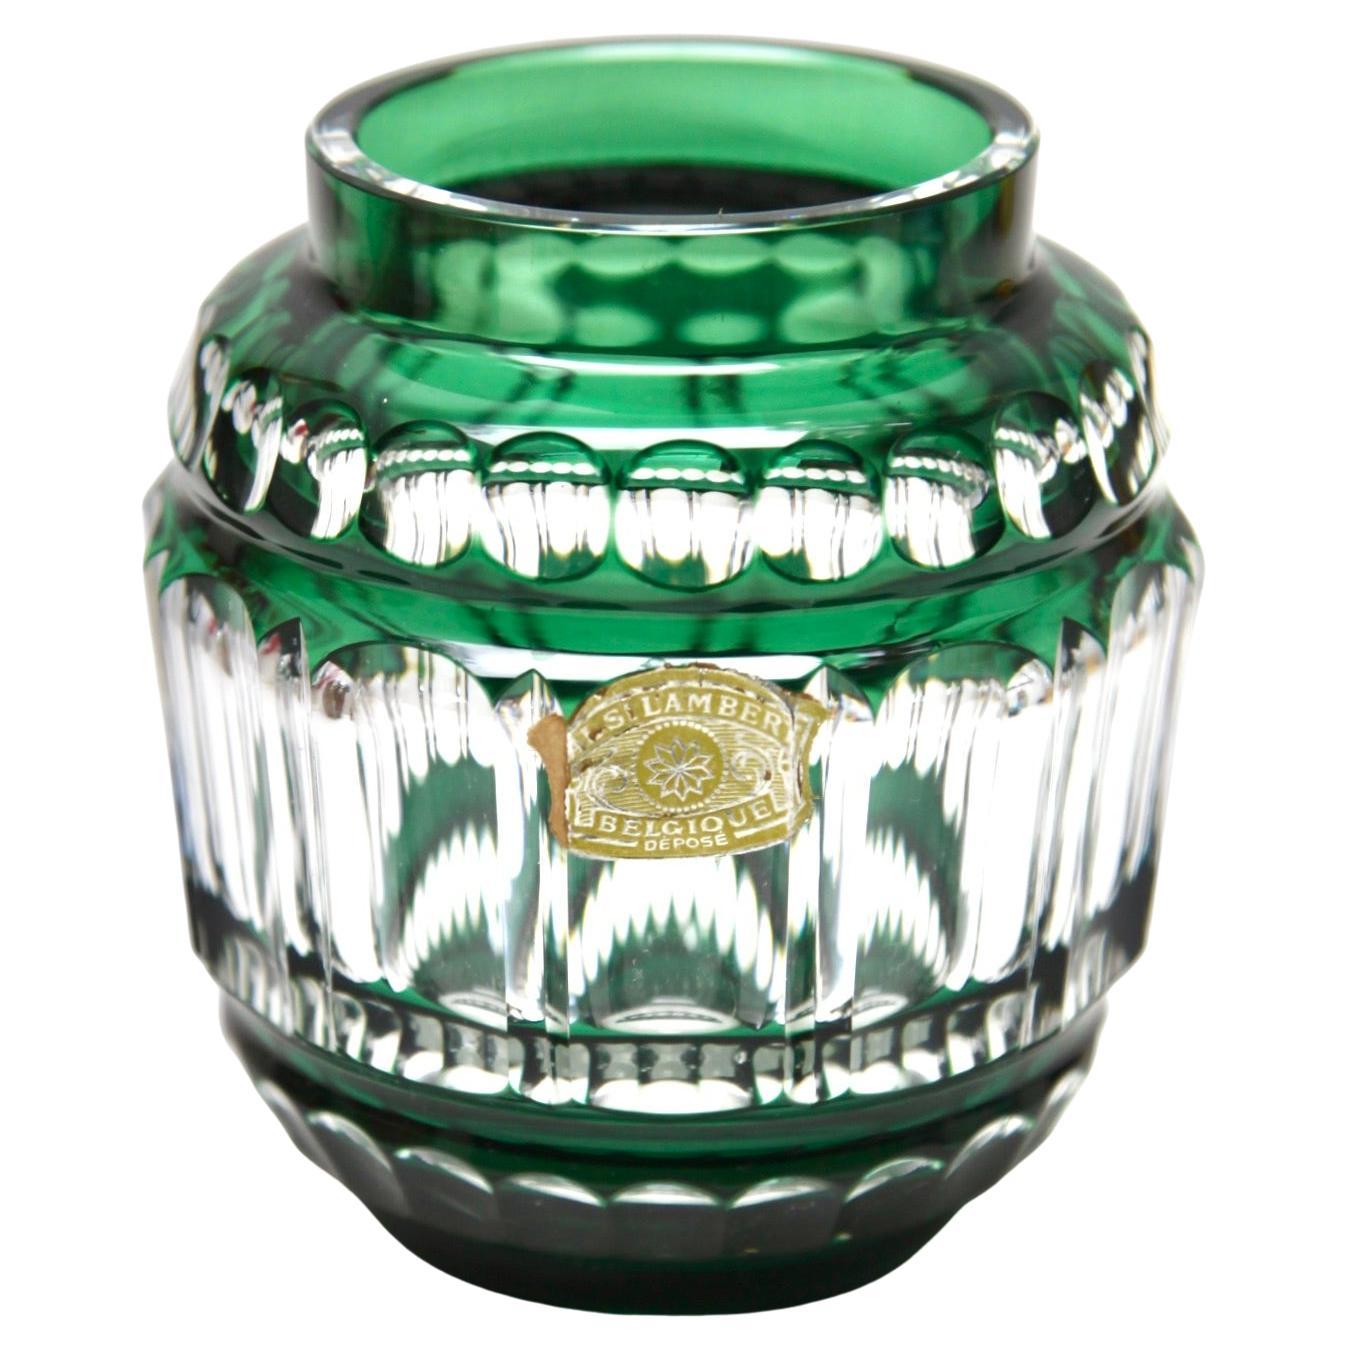 Art Deco Val Saint-Lambert Green Crystal Vase Cut-to-clear, 1950s